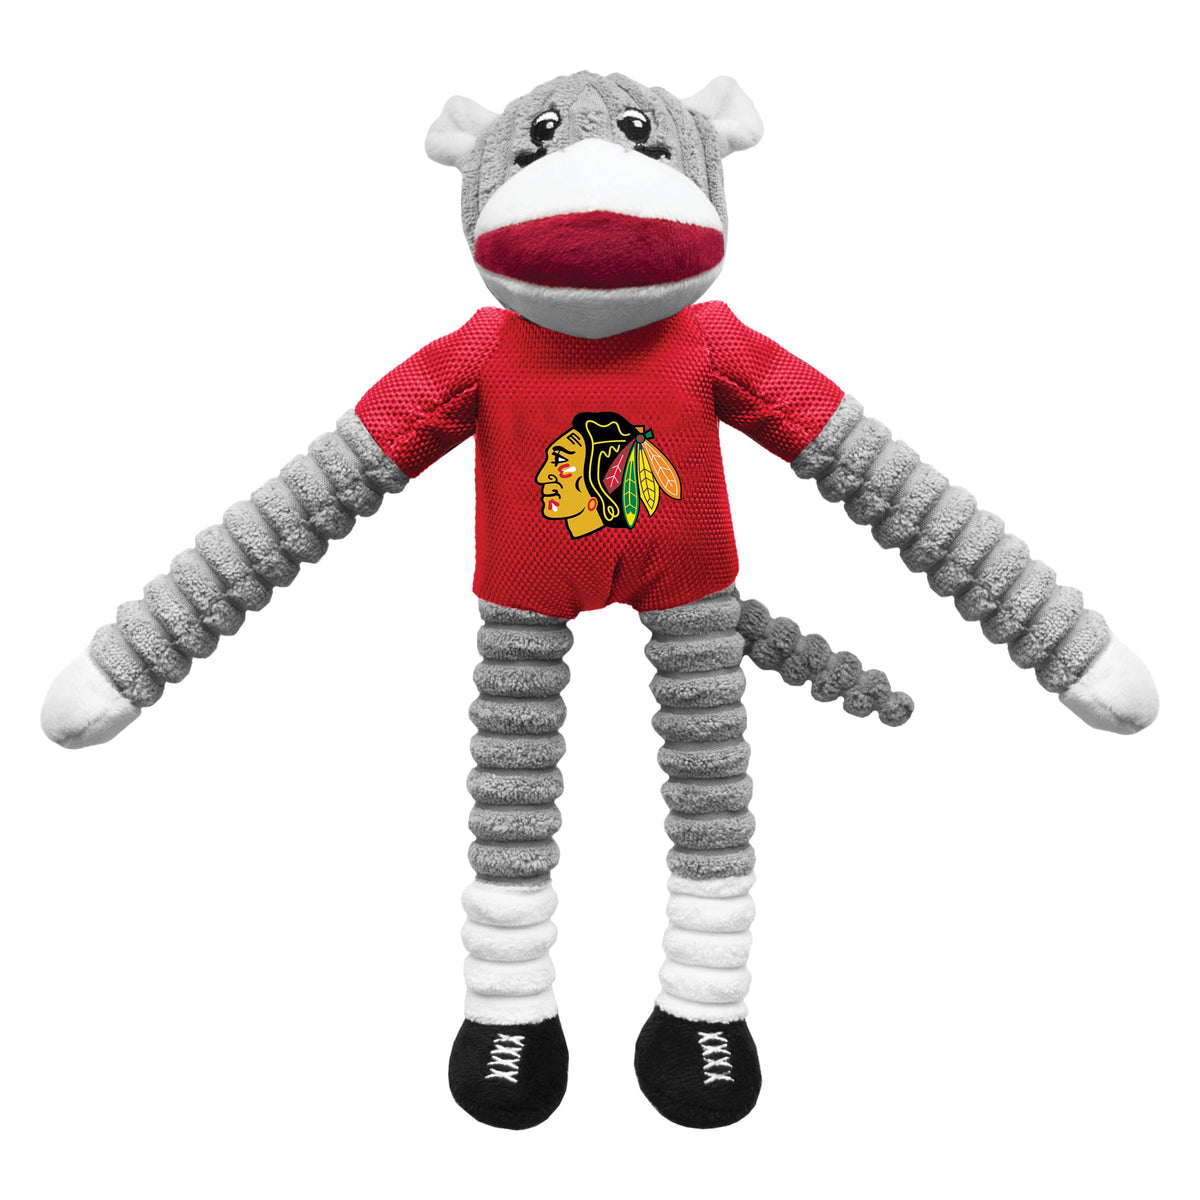 Chicago Blackhawks Sock Monkey Toy - 3 Red Rovers